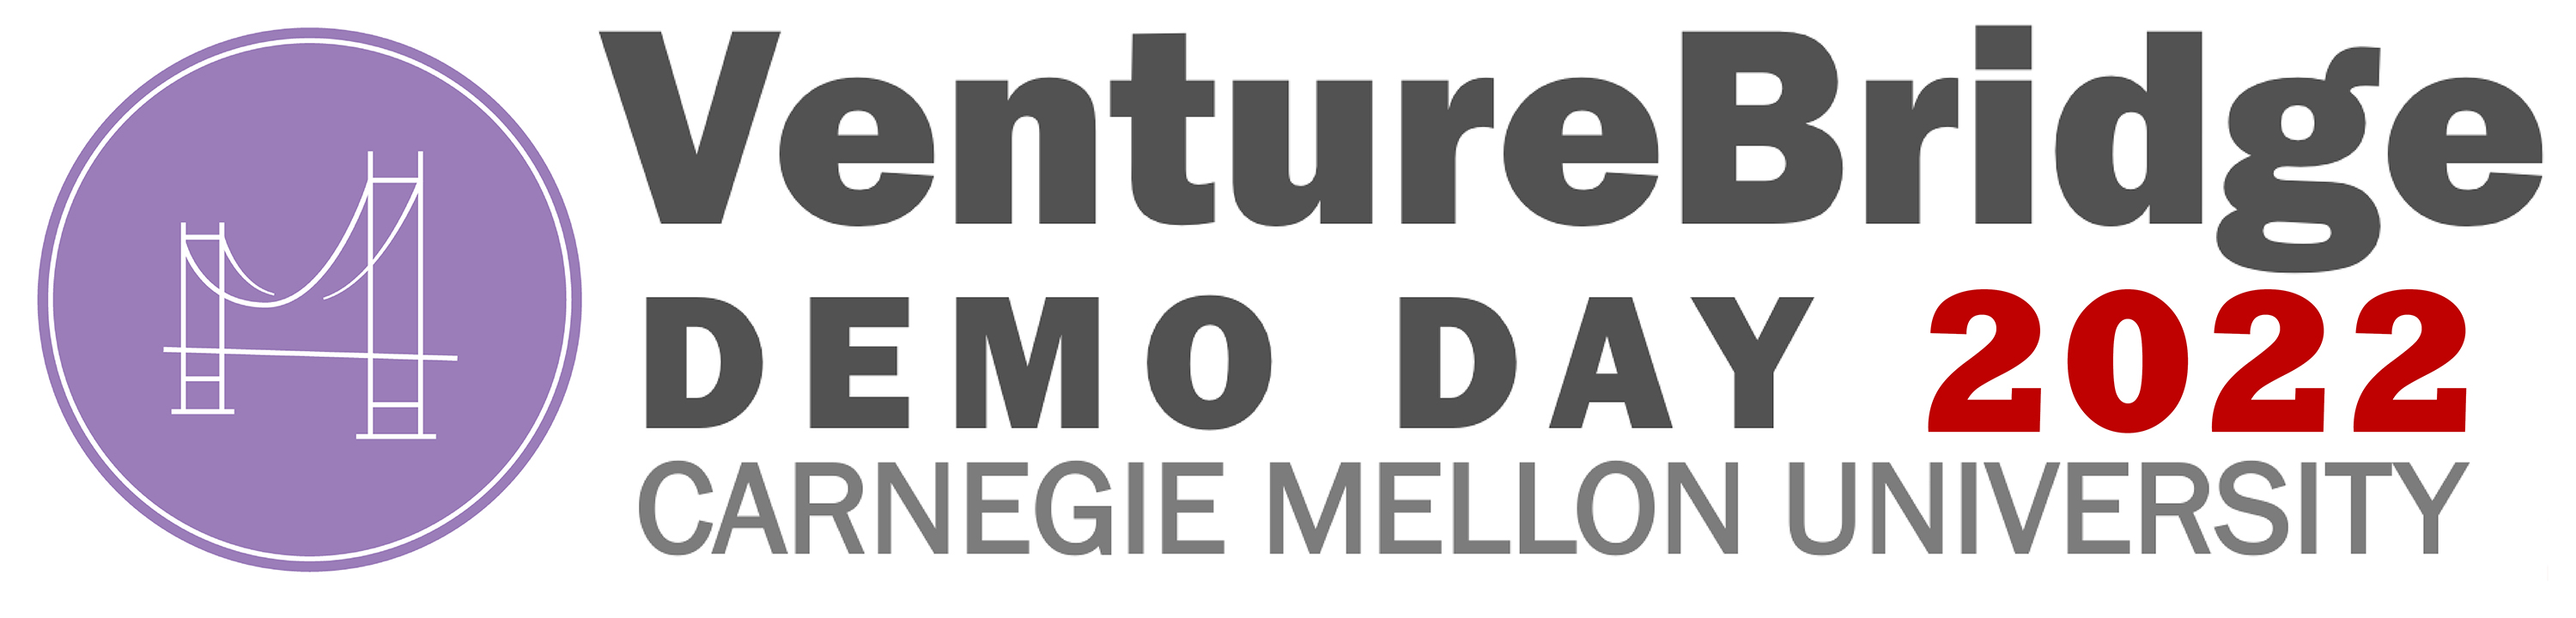 venturebridge-demo-day-2022-logo.jpg